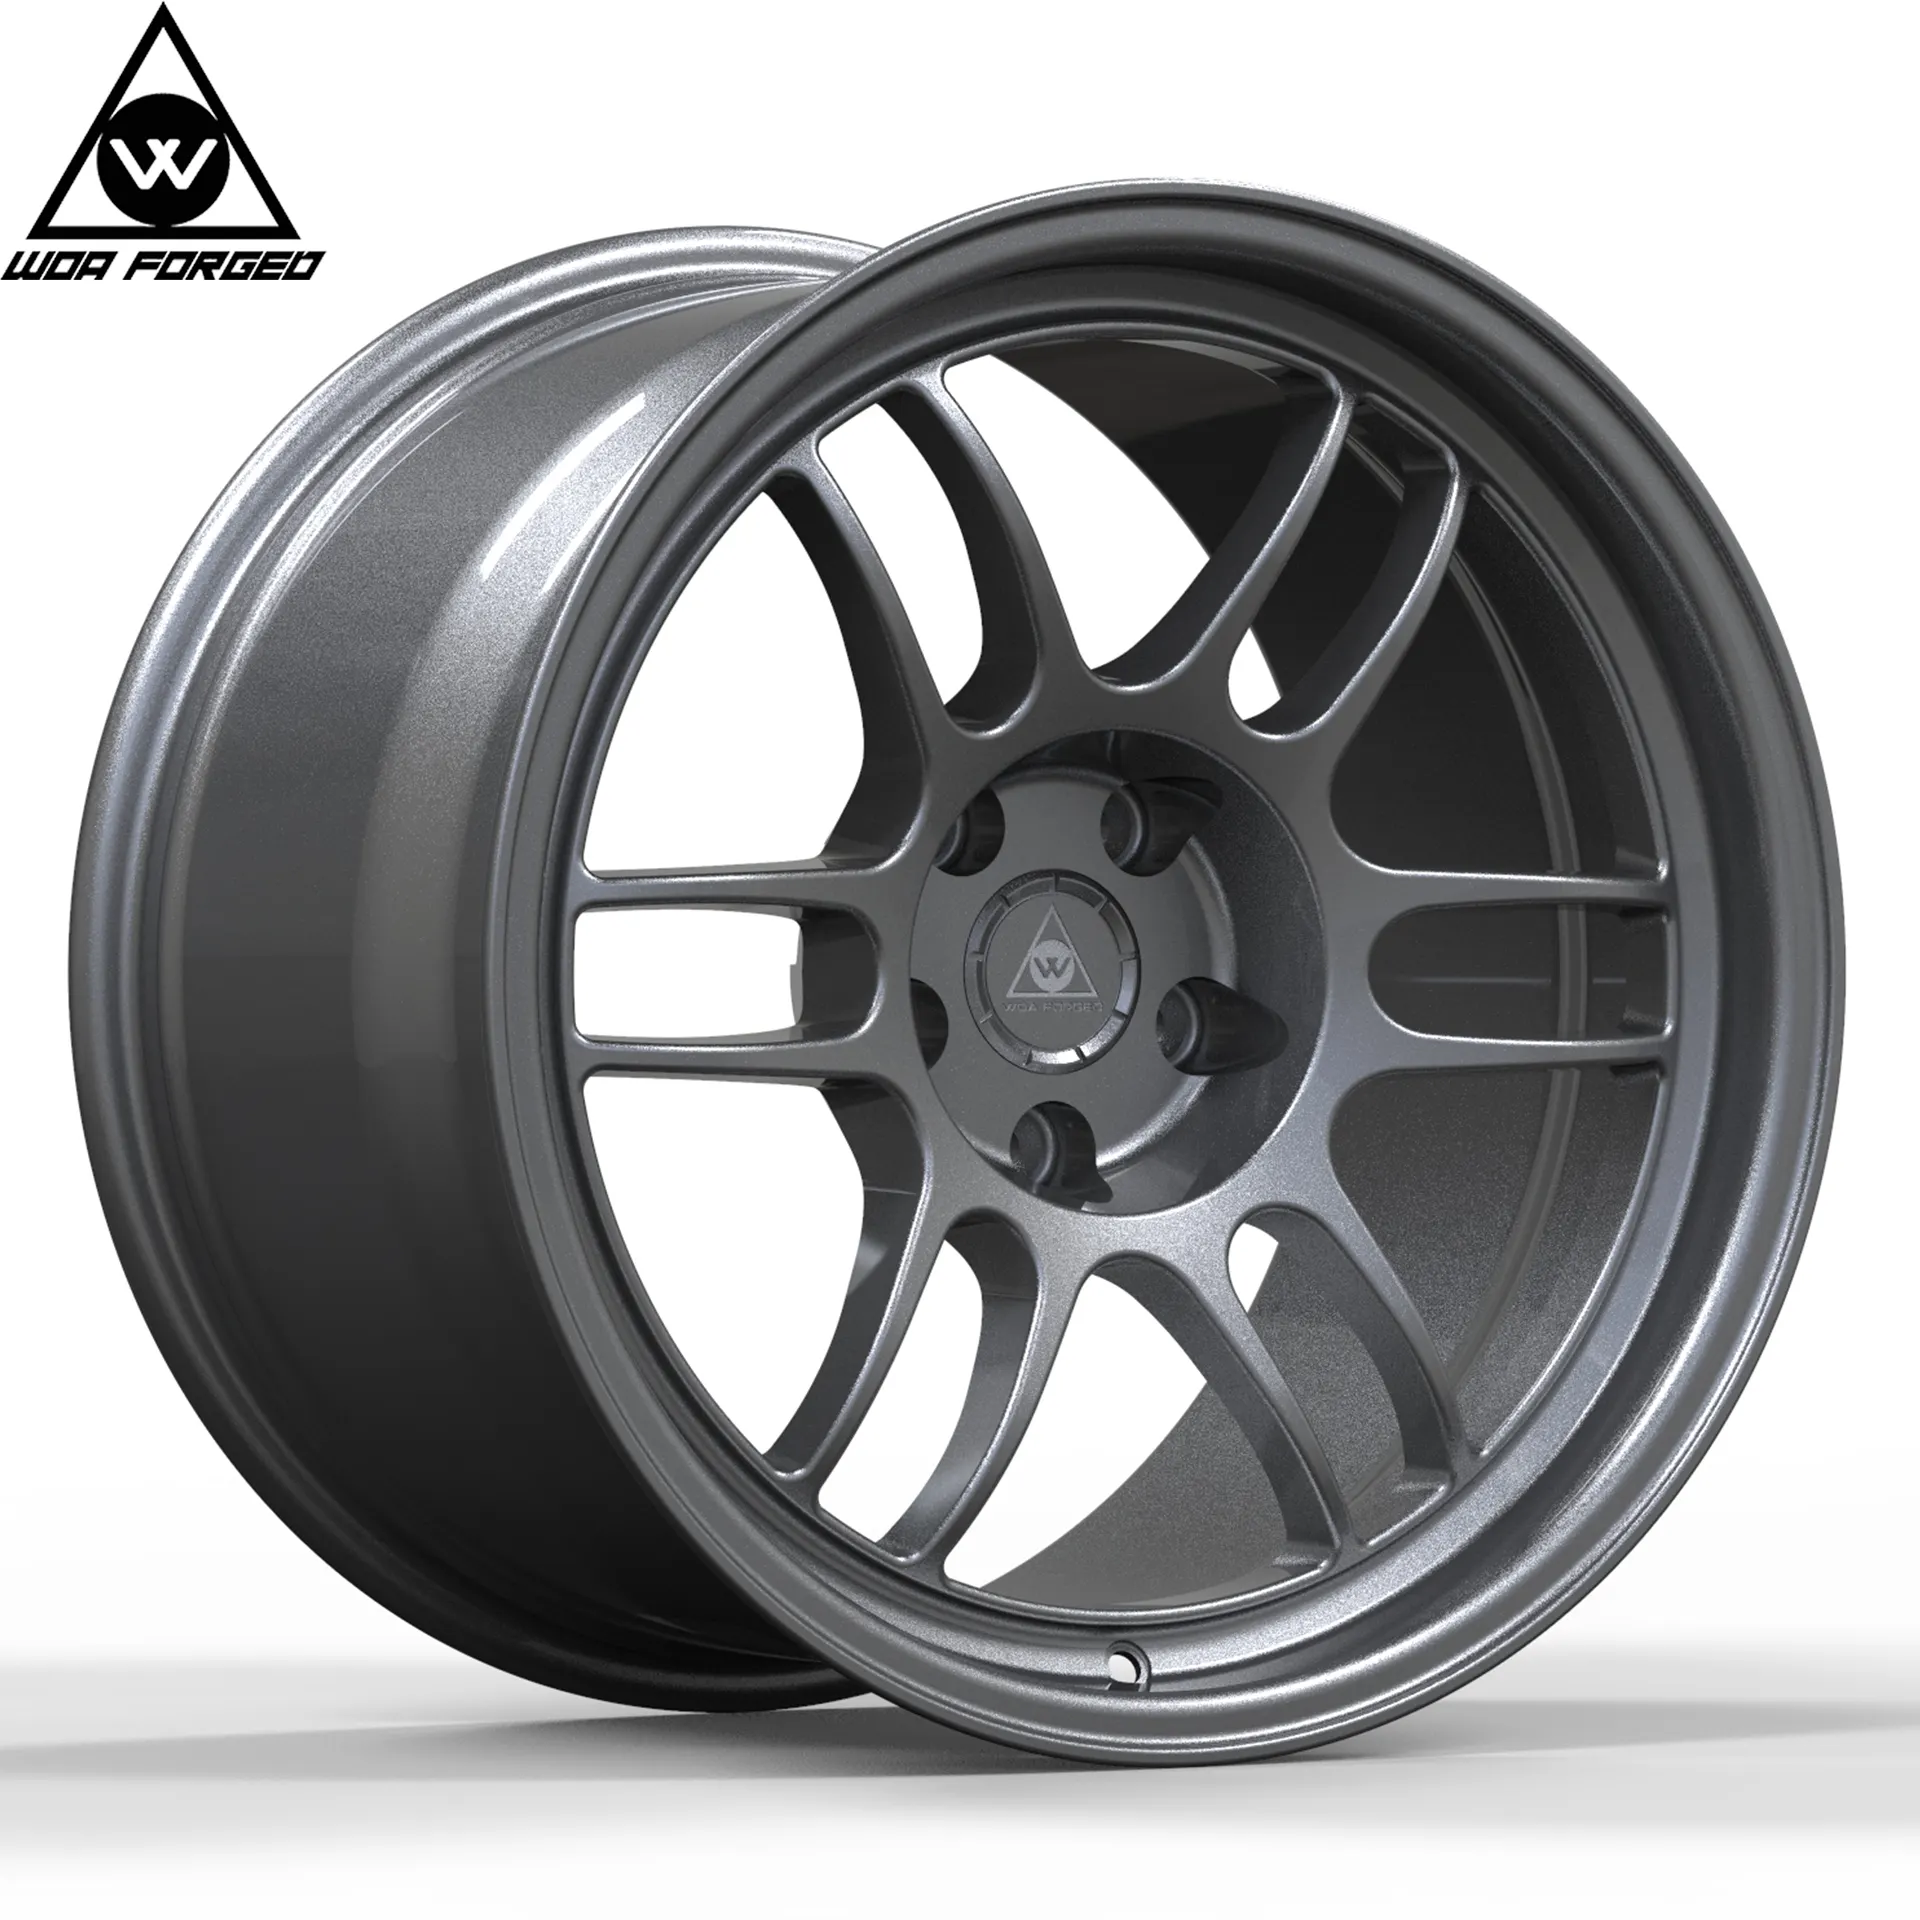 WOAORGED High quality forged aluminium alloy wheels Rim double spoke car wheel hub